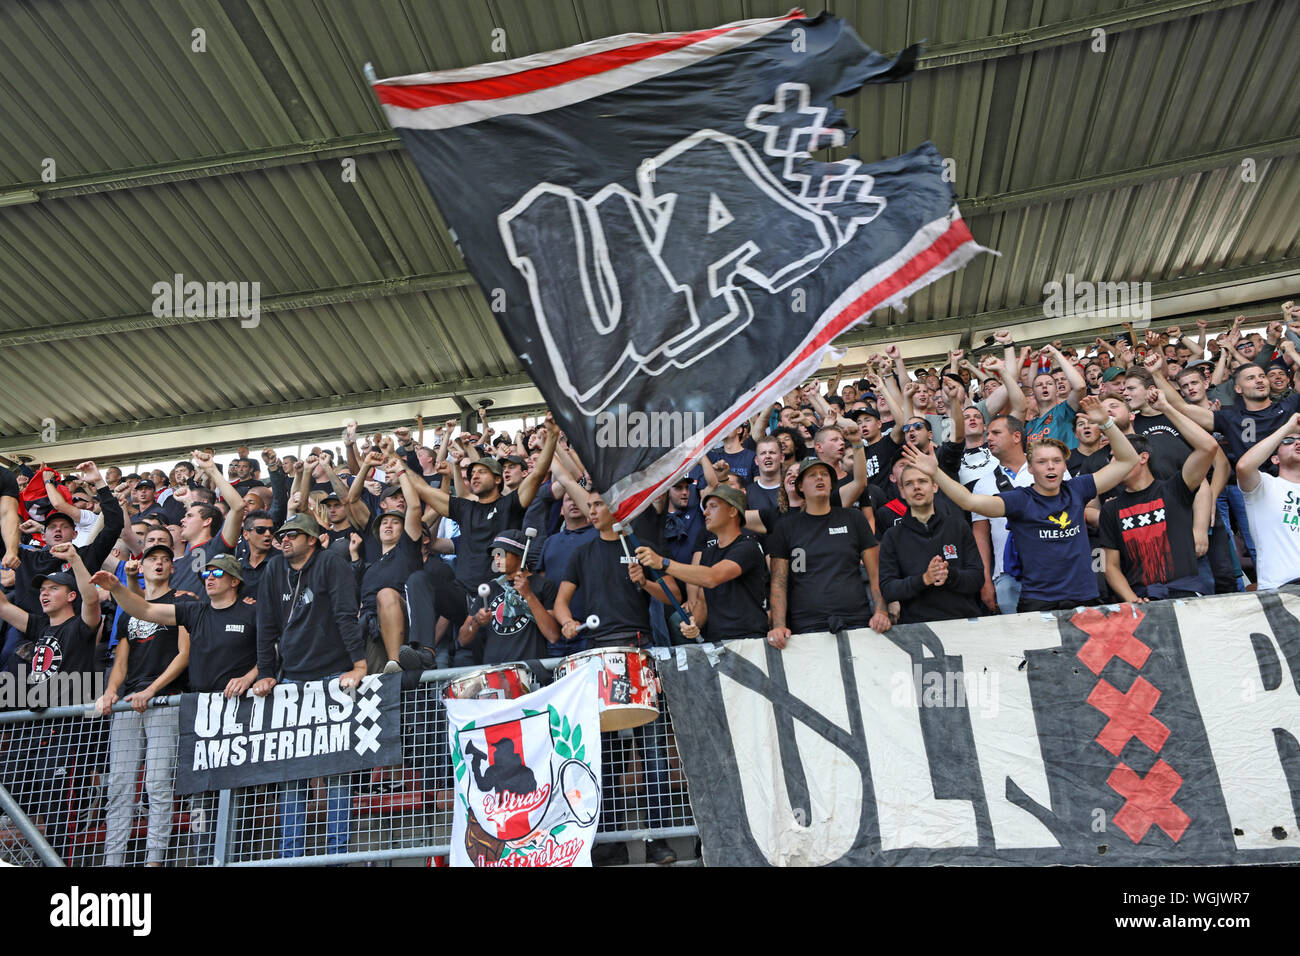 01-09-2019: Voetbal: Sparta Rotterdam v Ajax: Rotterdam Eredivisie seizoen  2019/2020, Het kasteel, stadion, Sparta Supporters Stock Photo - Alamy